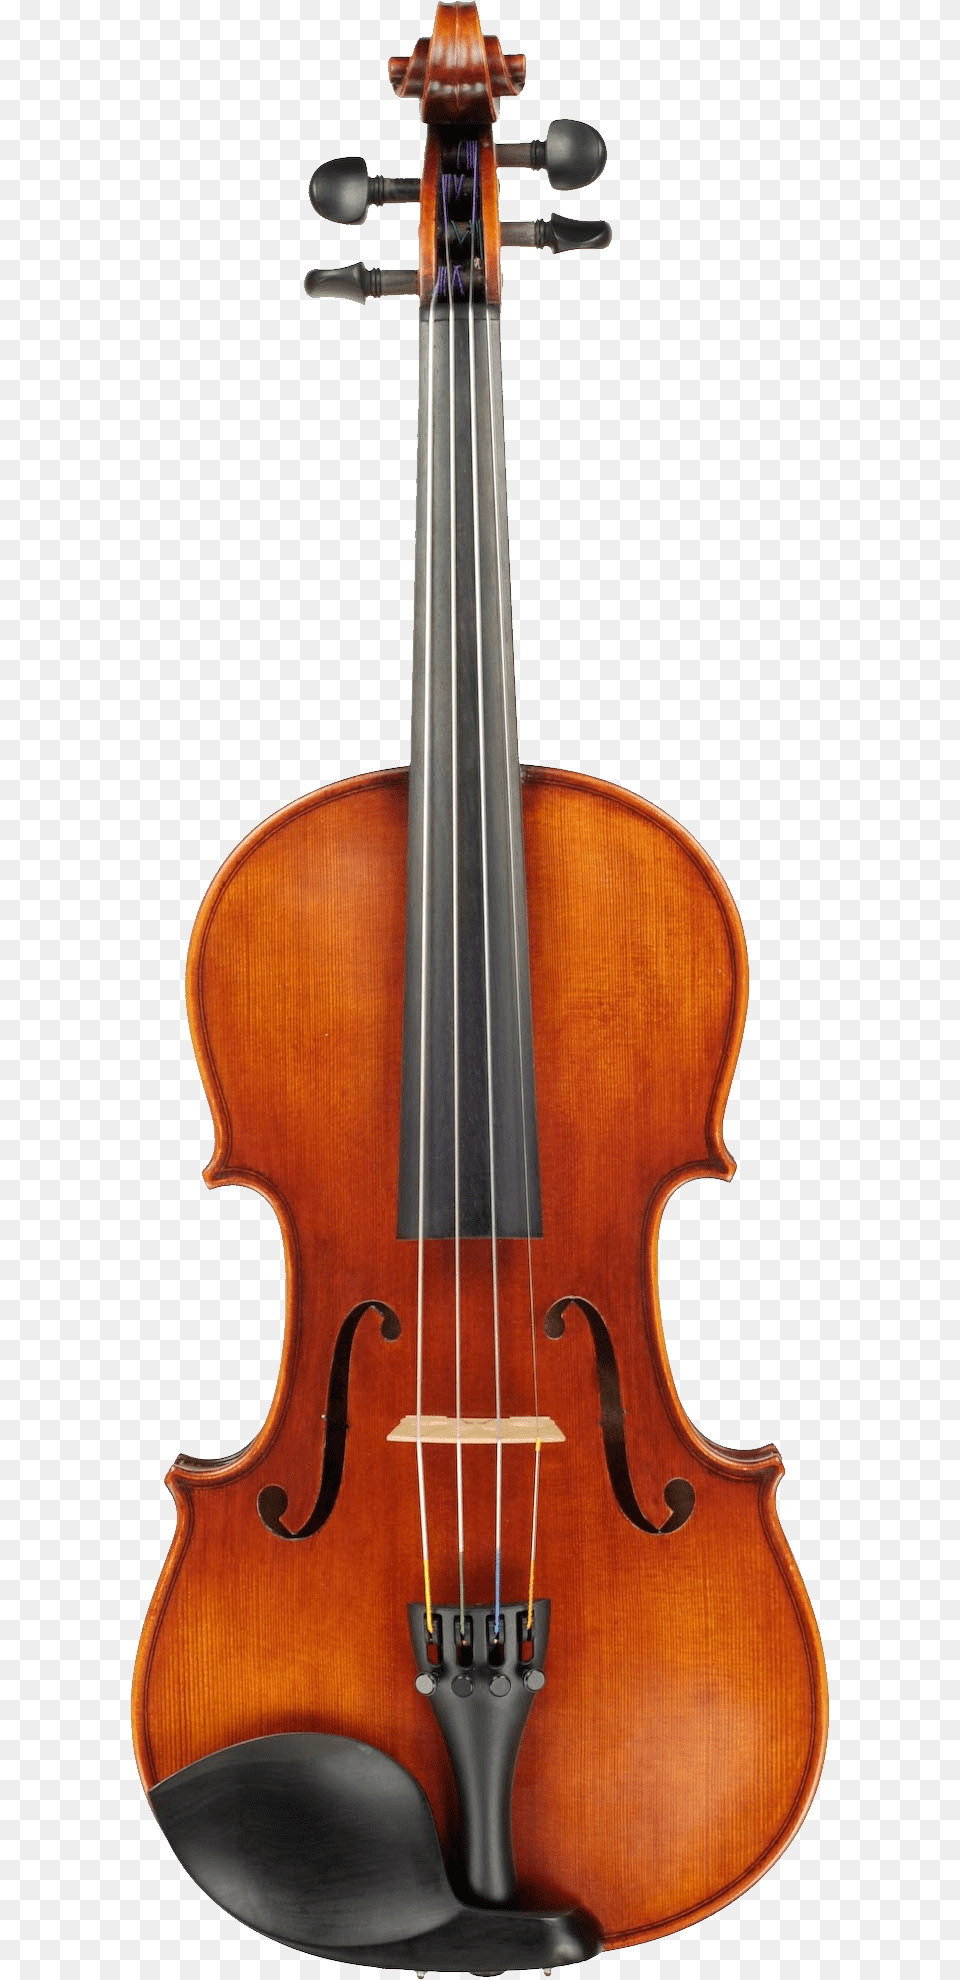 Violin, Musical Instrument Png Image